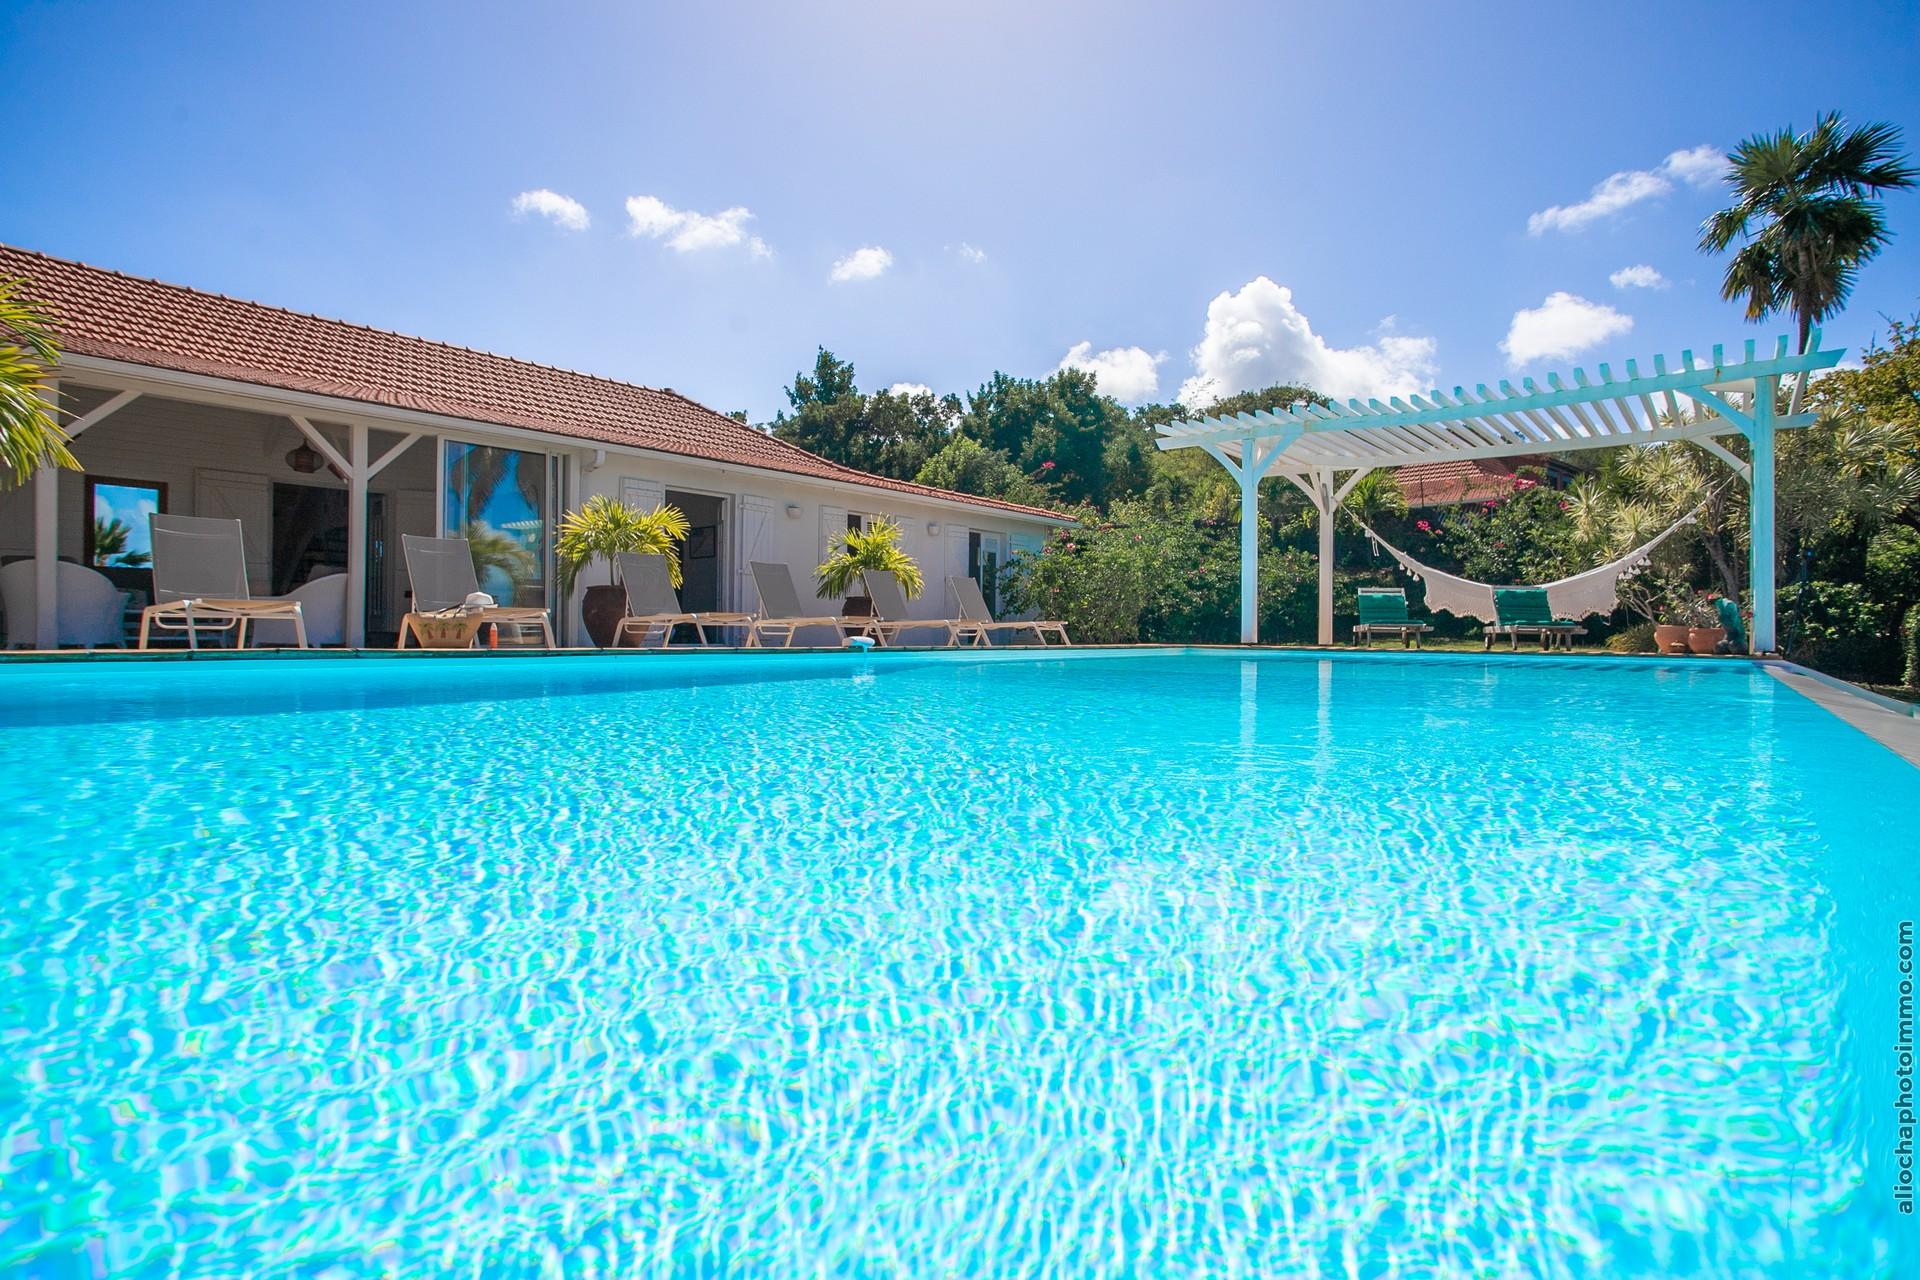 Location villa de luxe martinique vue mer piscine vue ensemble